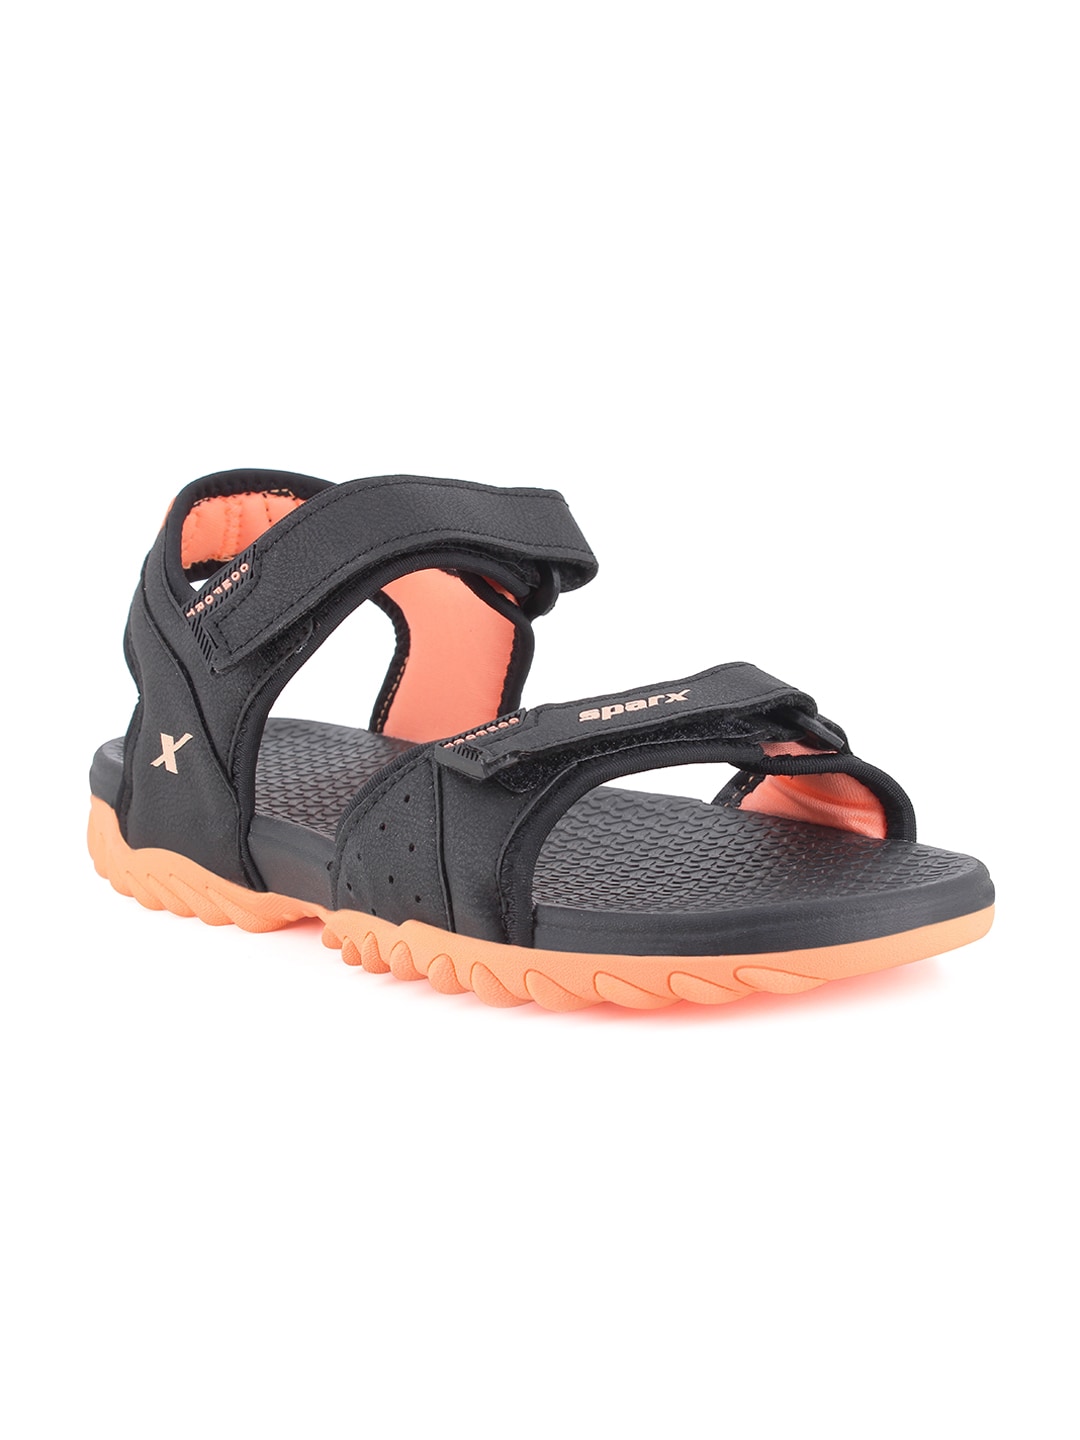 Sparx Women Black & Orange Patterned Sports Sandals Price in India